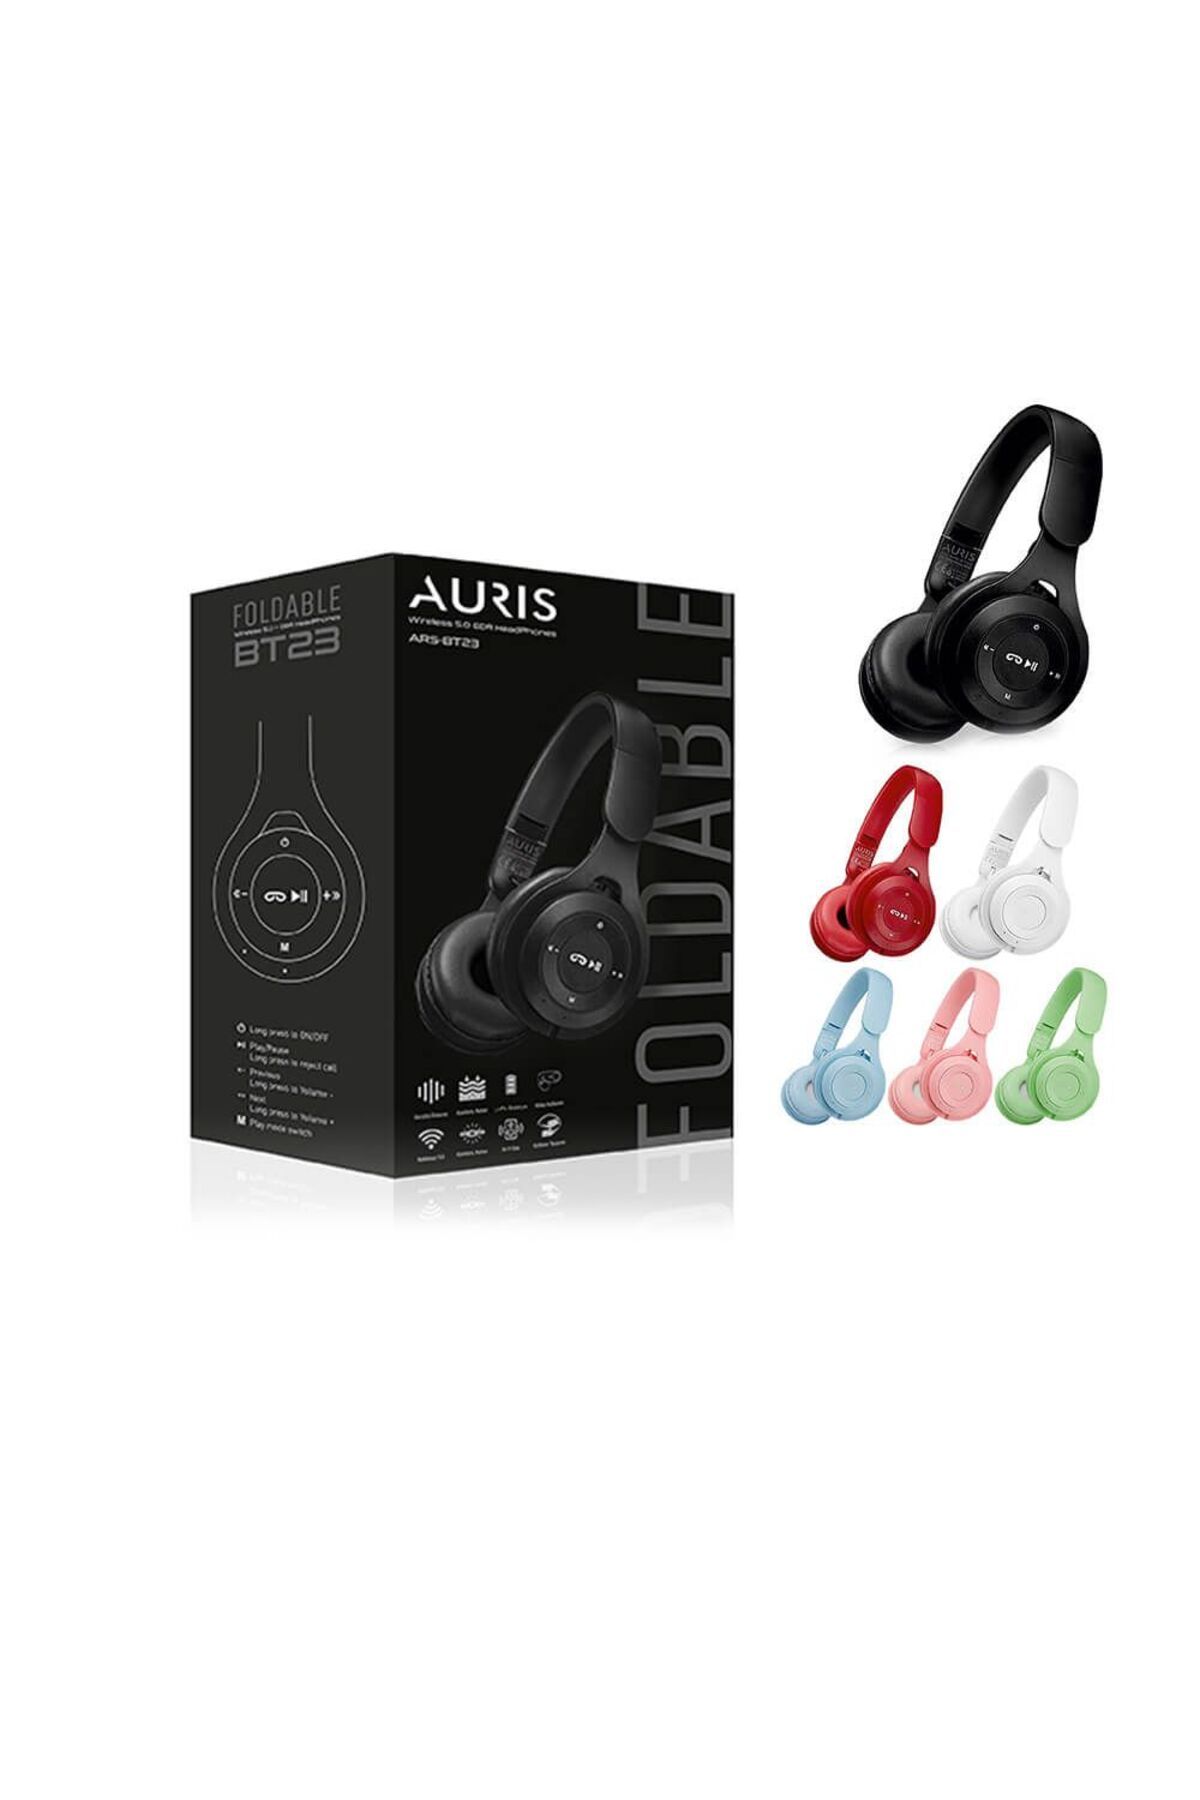 Auris AURİS ARS-BT23 Katlanabilir Kafa Üstü Kablosuz Bluetooth Kulaklık